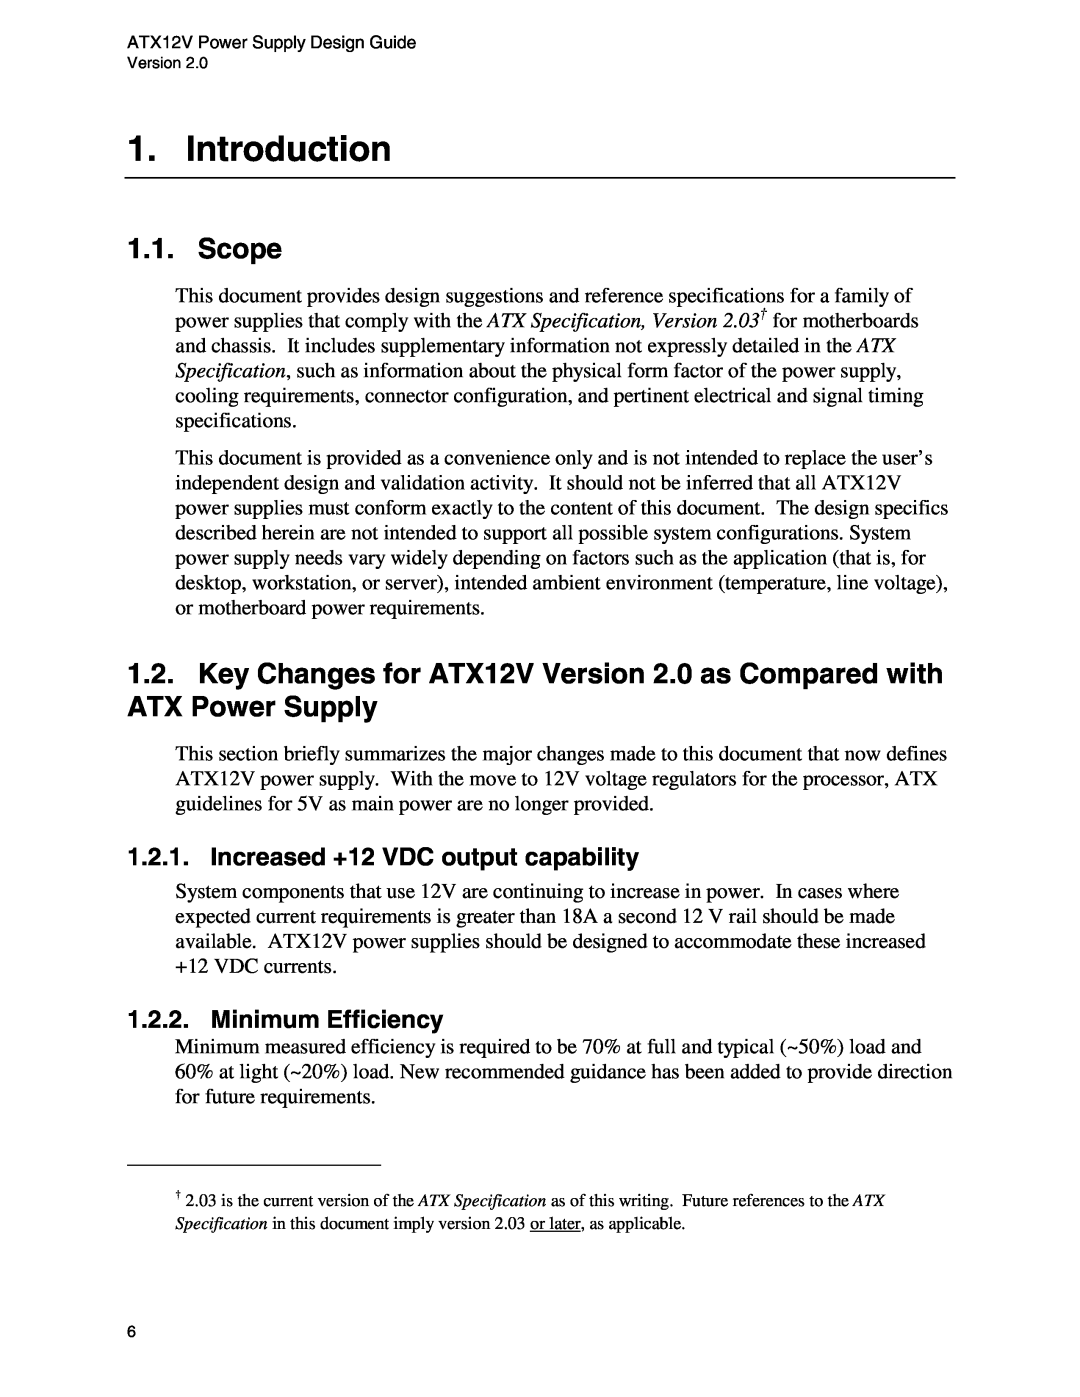 Intel ATX12V manual Introduction, Scope, Increased +12 VDC output capability, Minimum Efficiency 